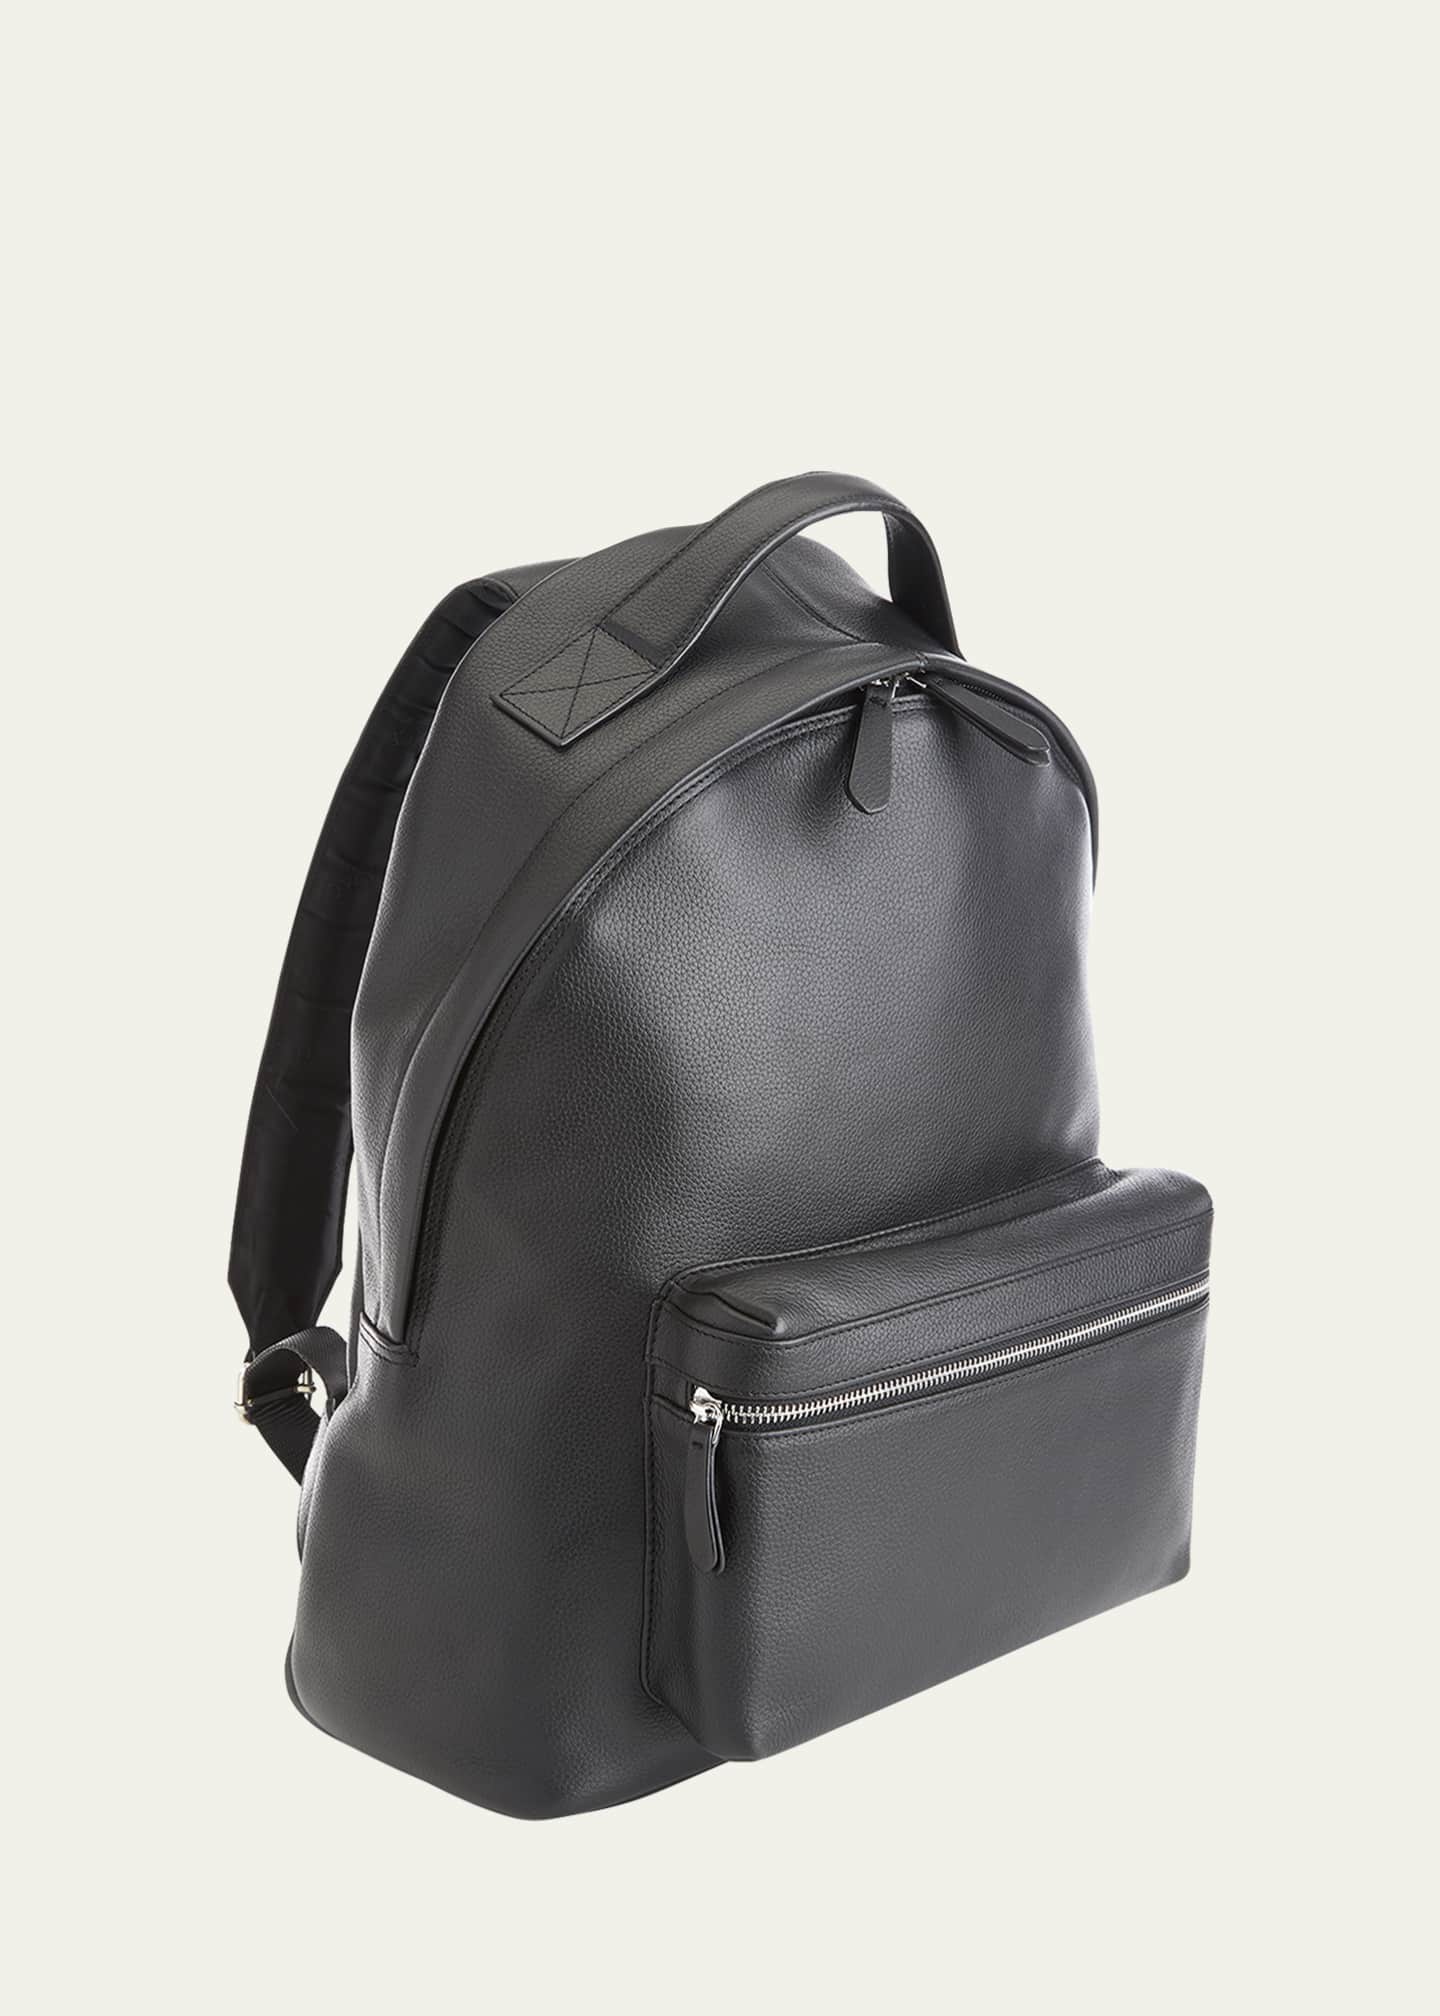 Royce Executive Office Black Leather Laptop Messenger Bag